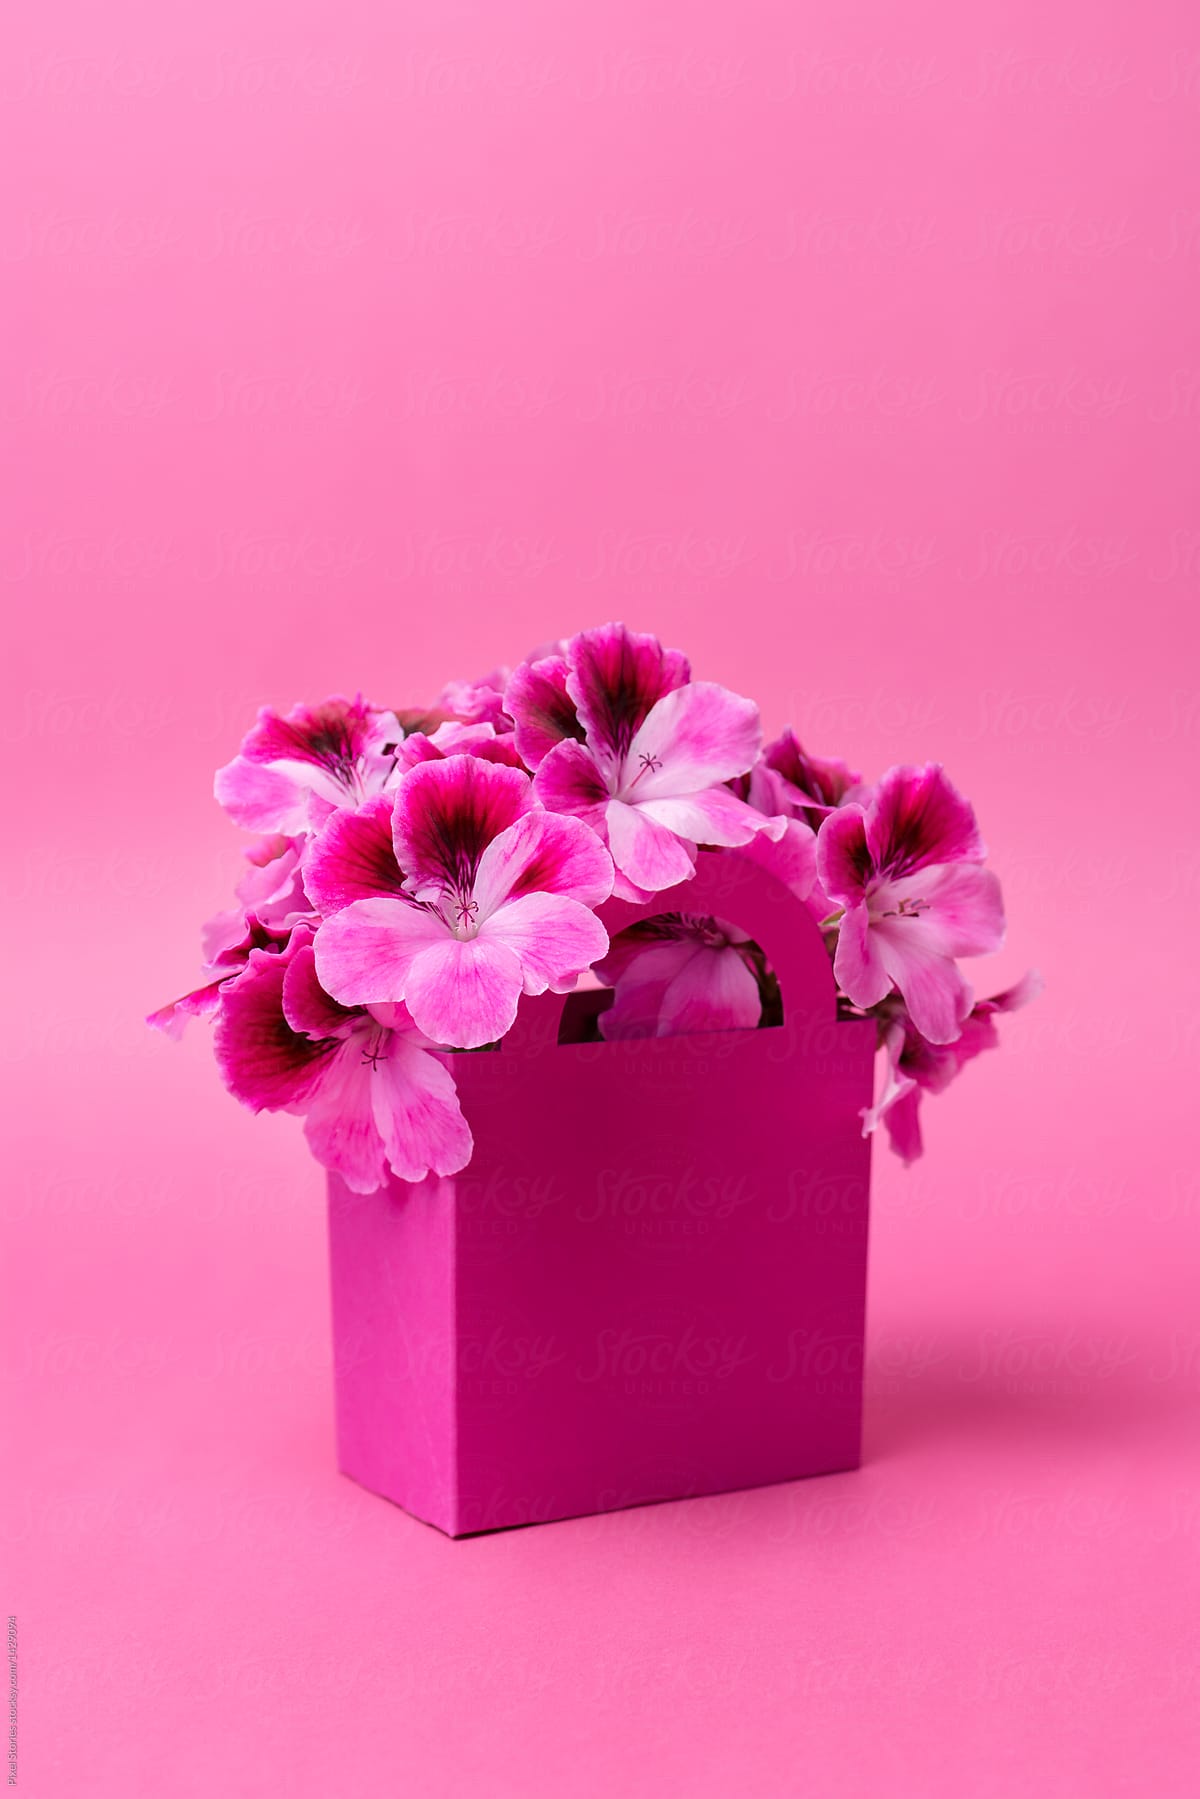 Geranium flowers arranged in a paper bag